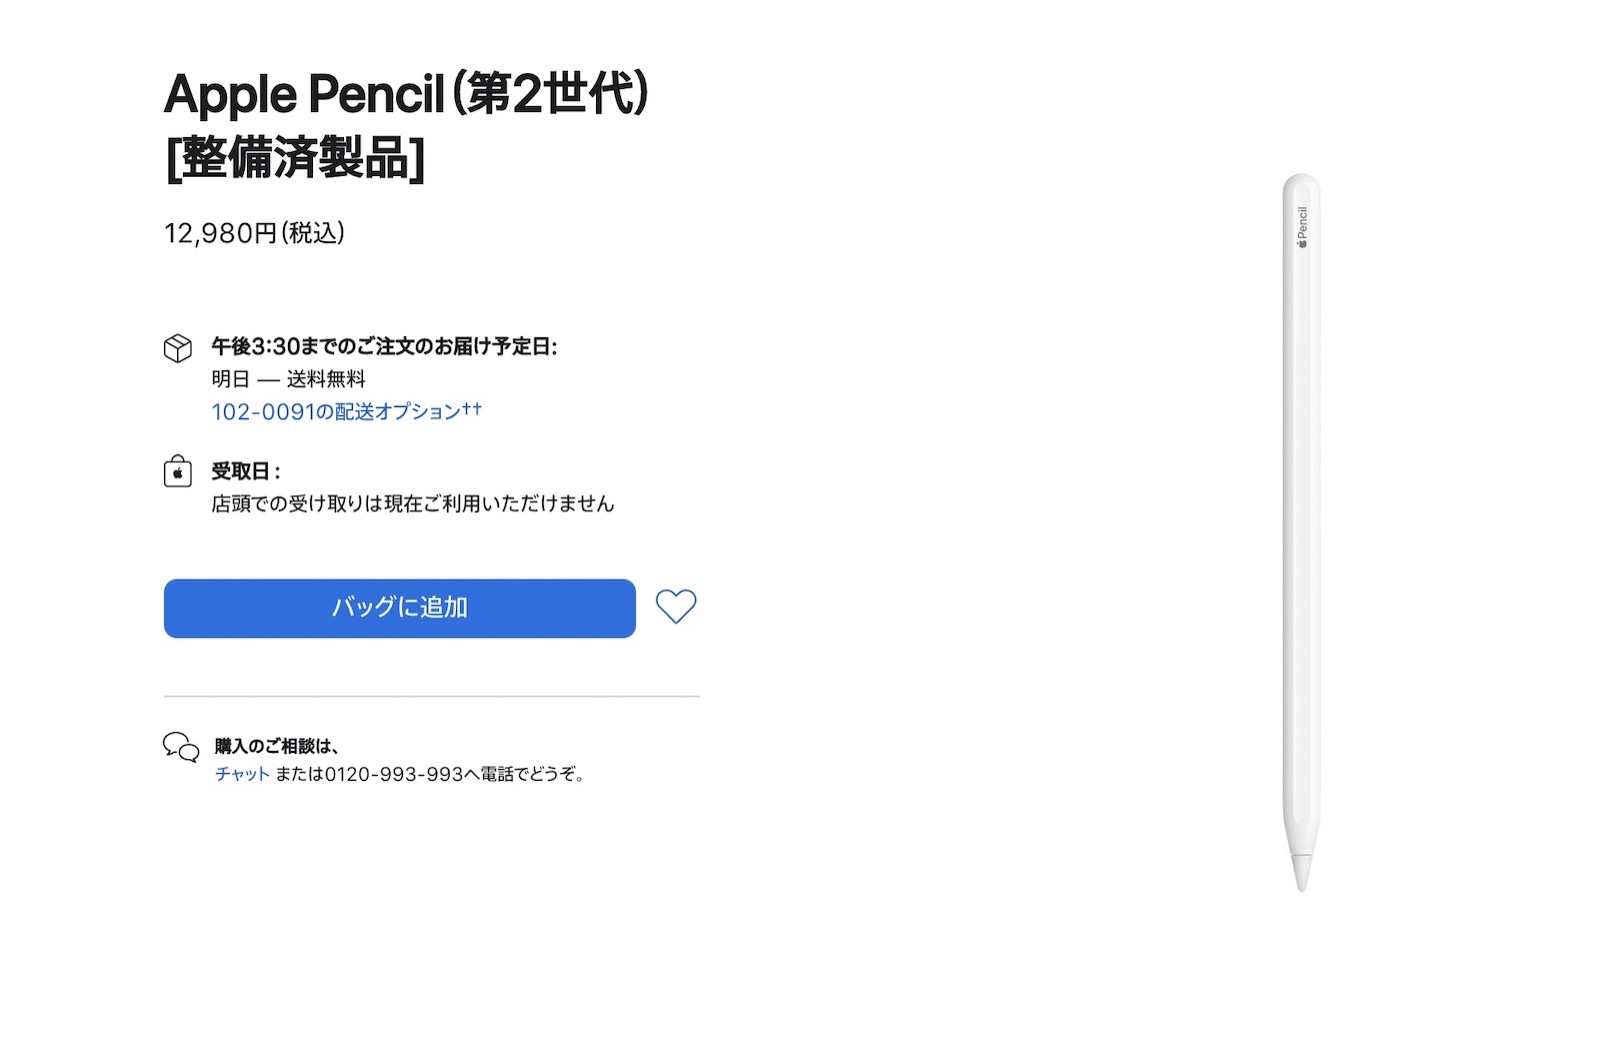 Apple pencil refurbished model